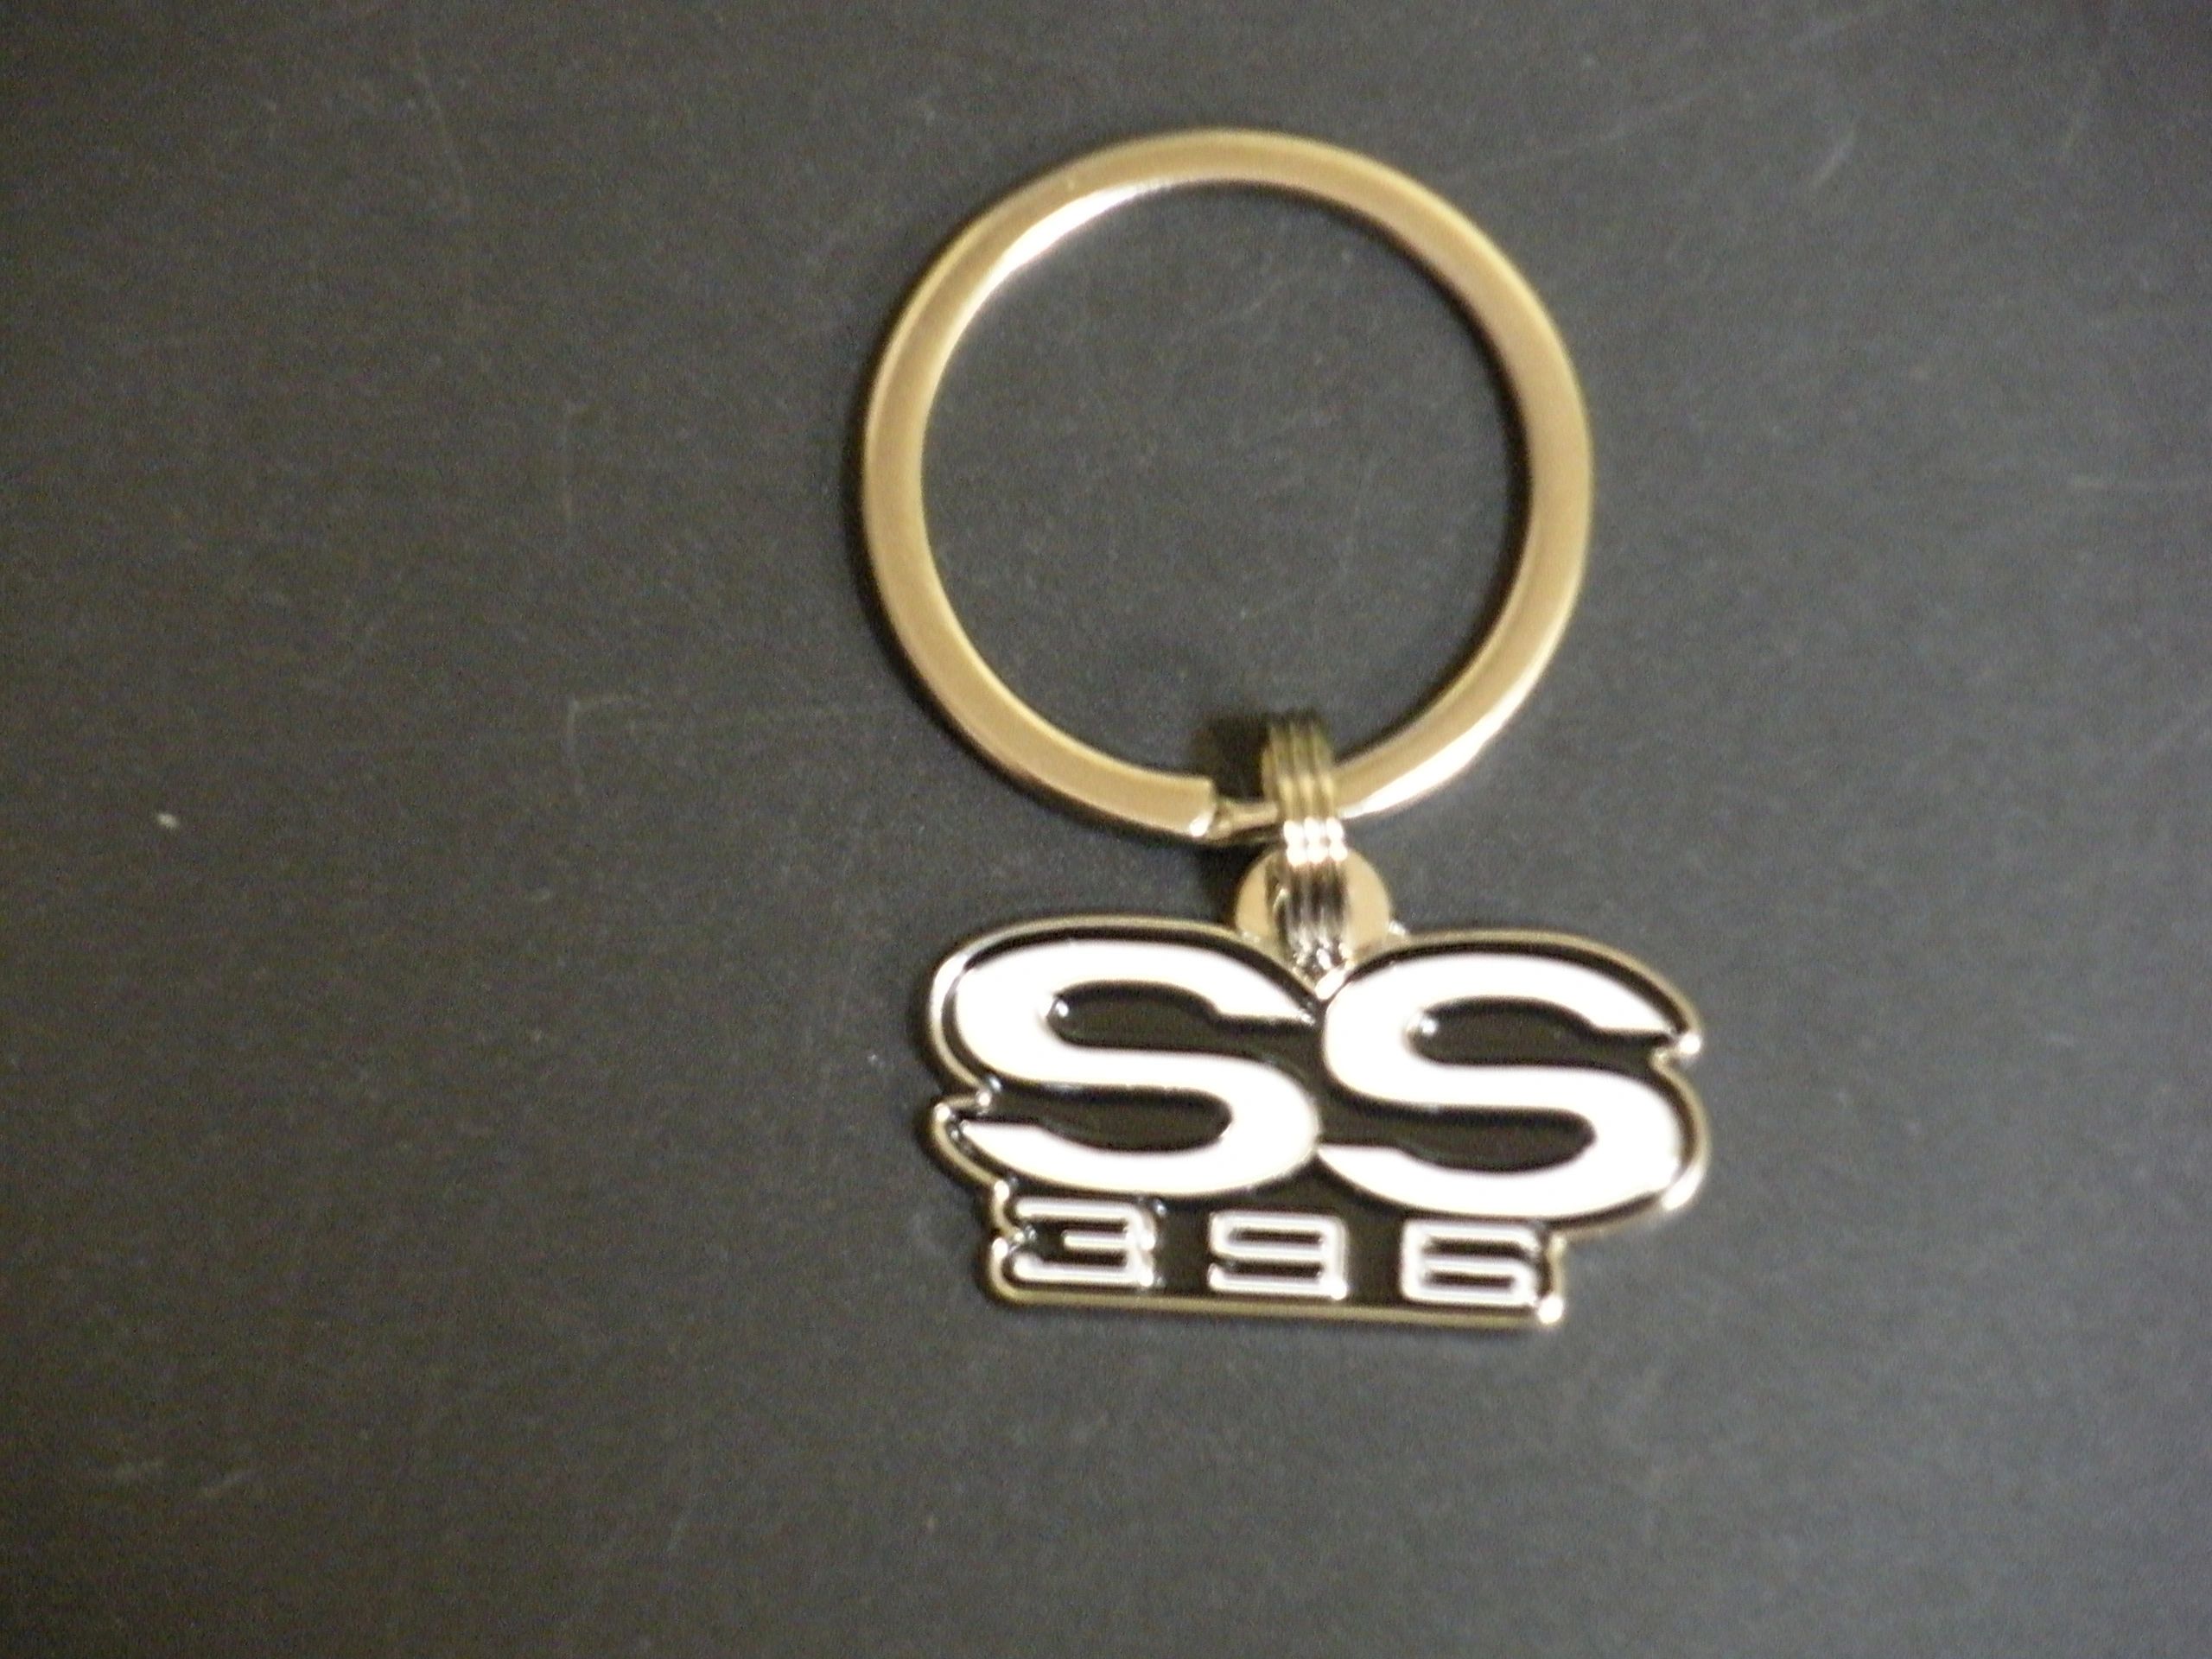 A6 Chevelle SS427 emblem keychain 